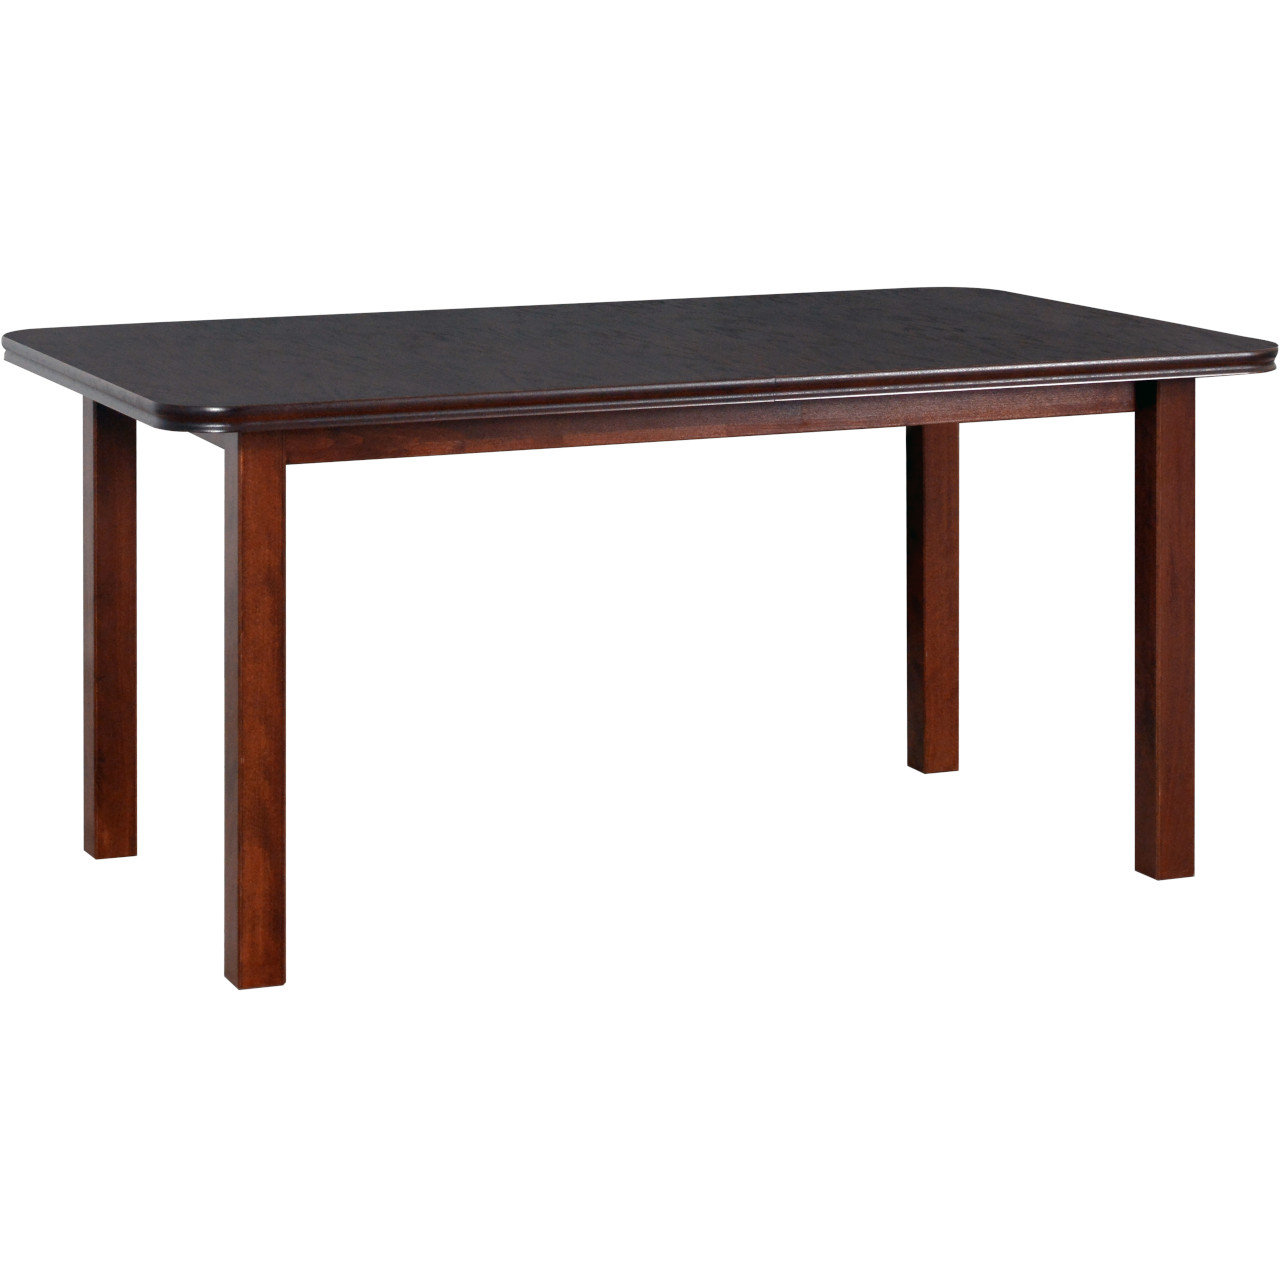 Stôl WENUS 8 100x200/300 orech, dubová dyha